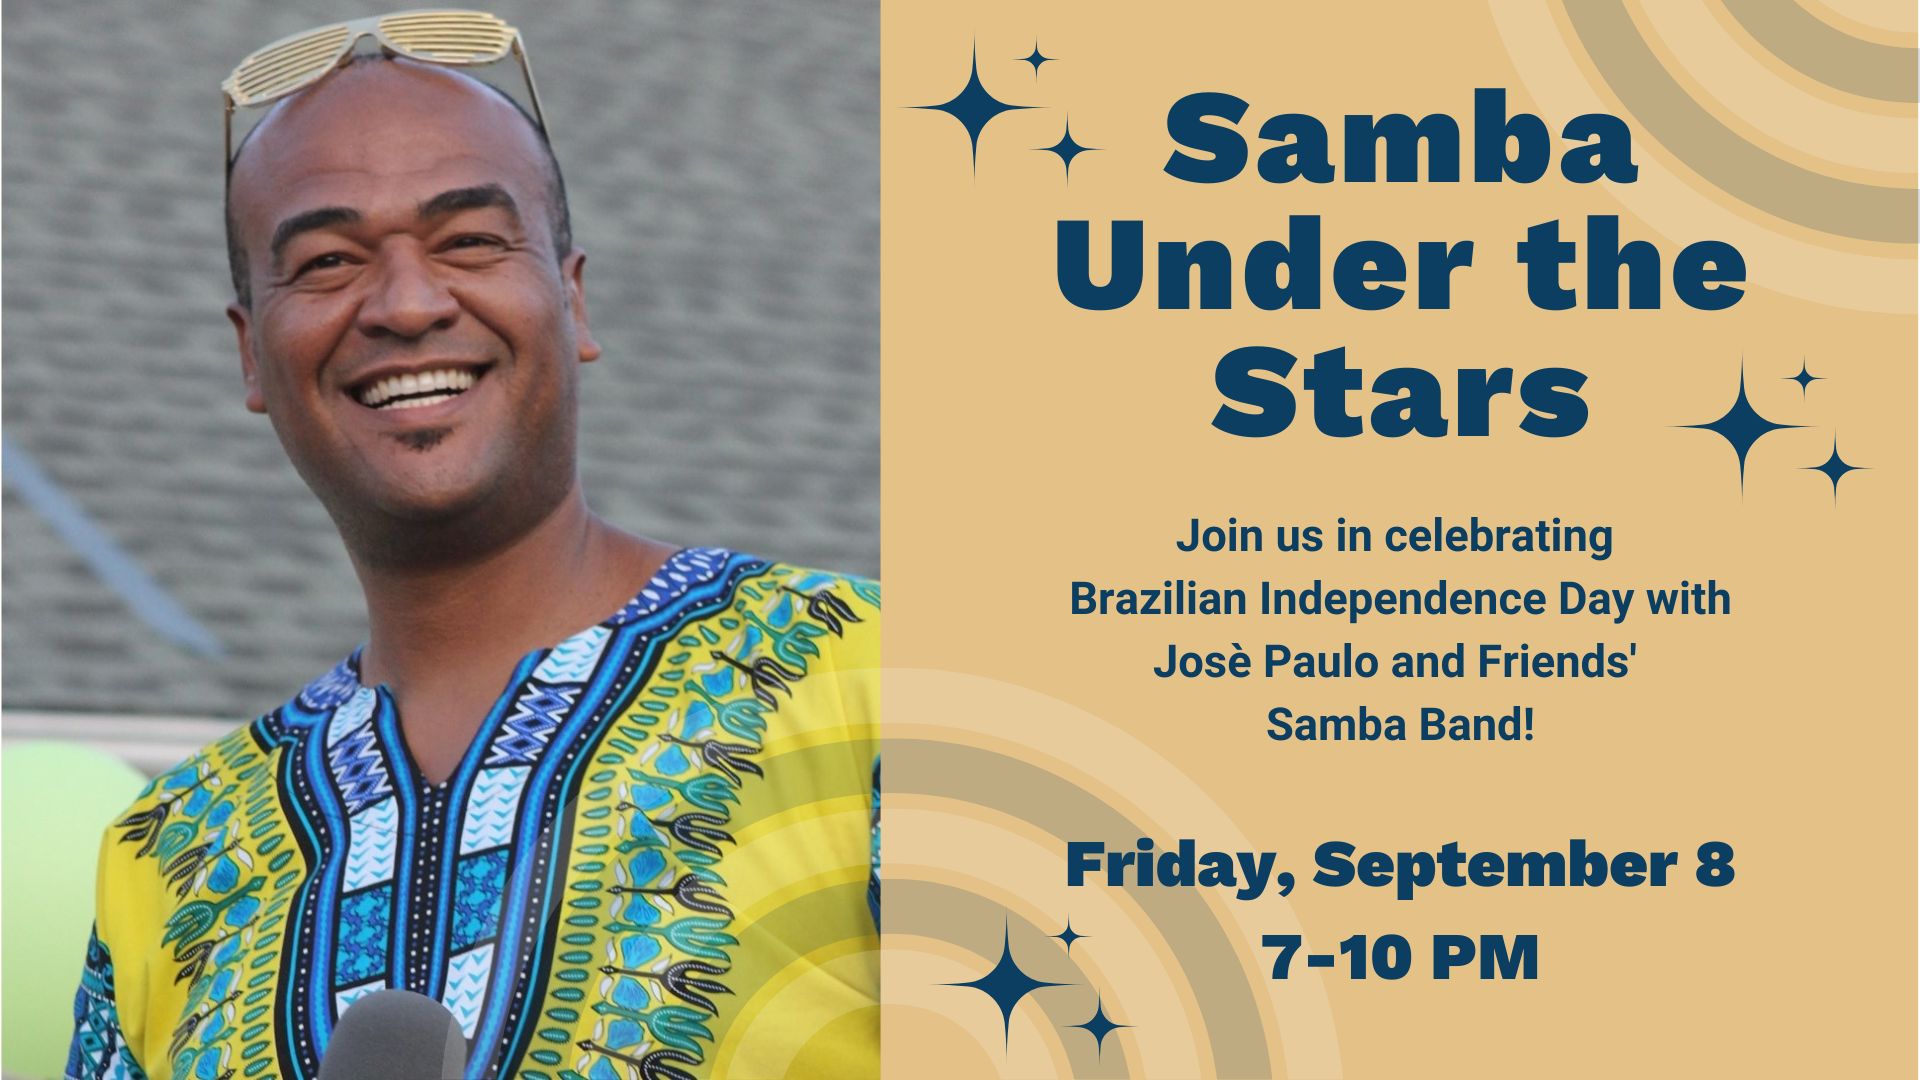 samba under the stars promo with photo of jose paulo